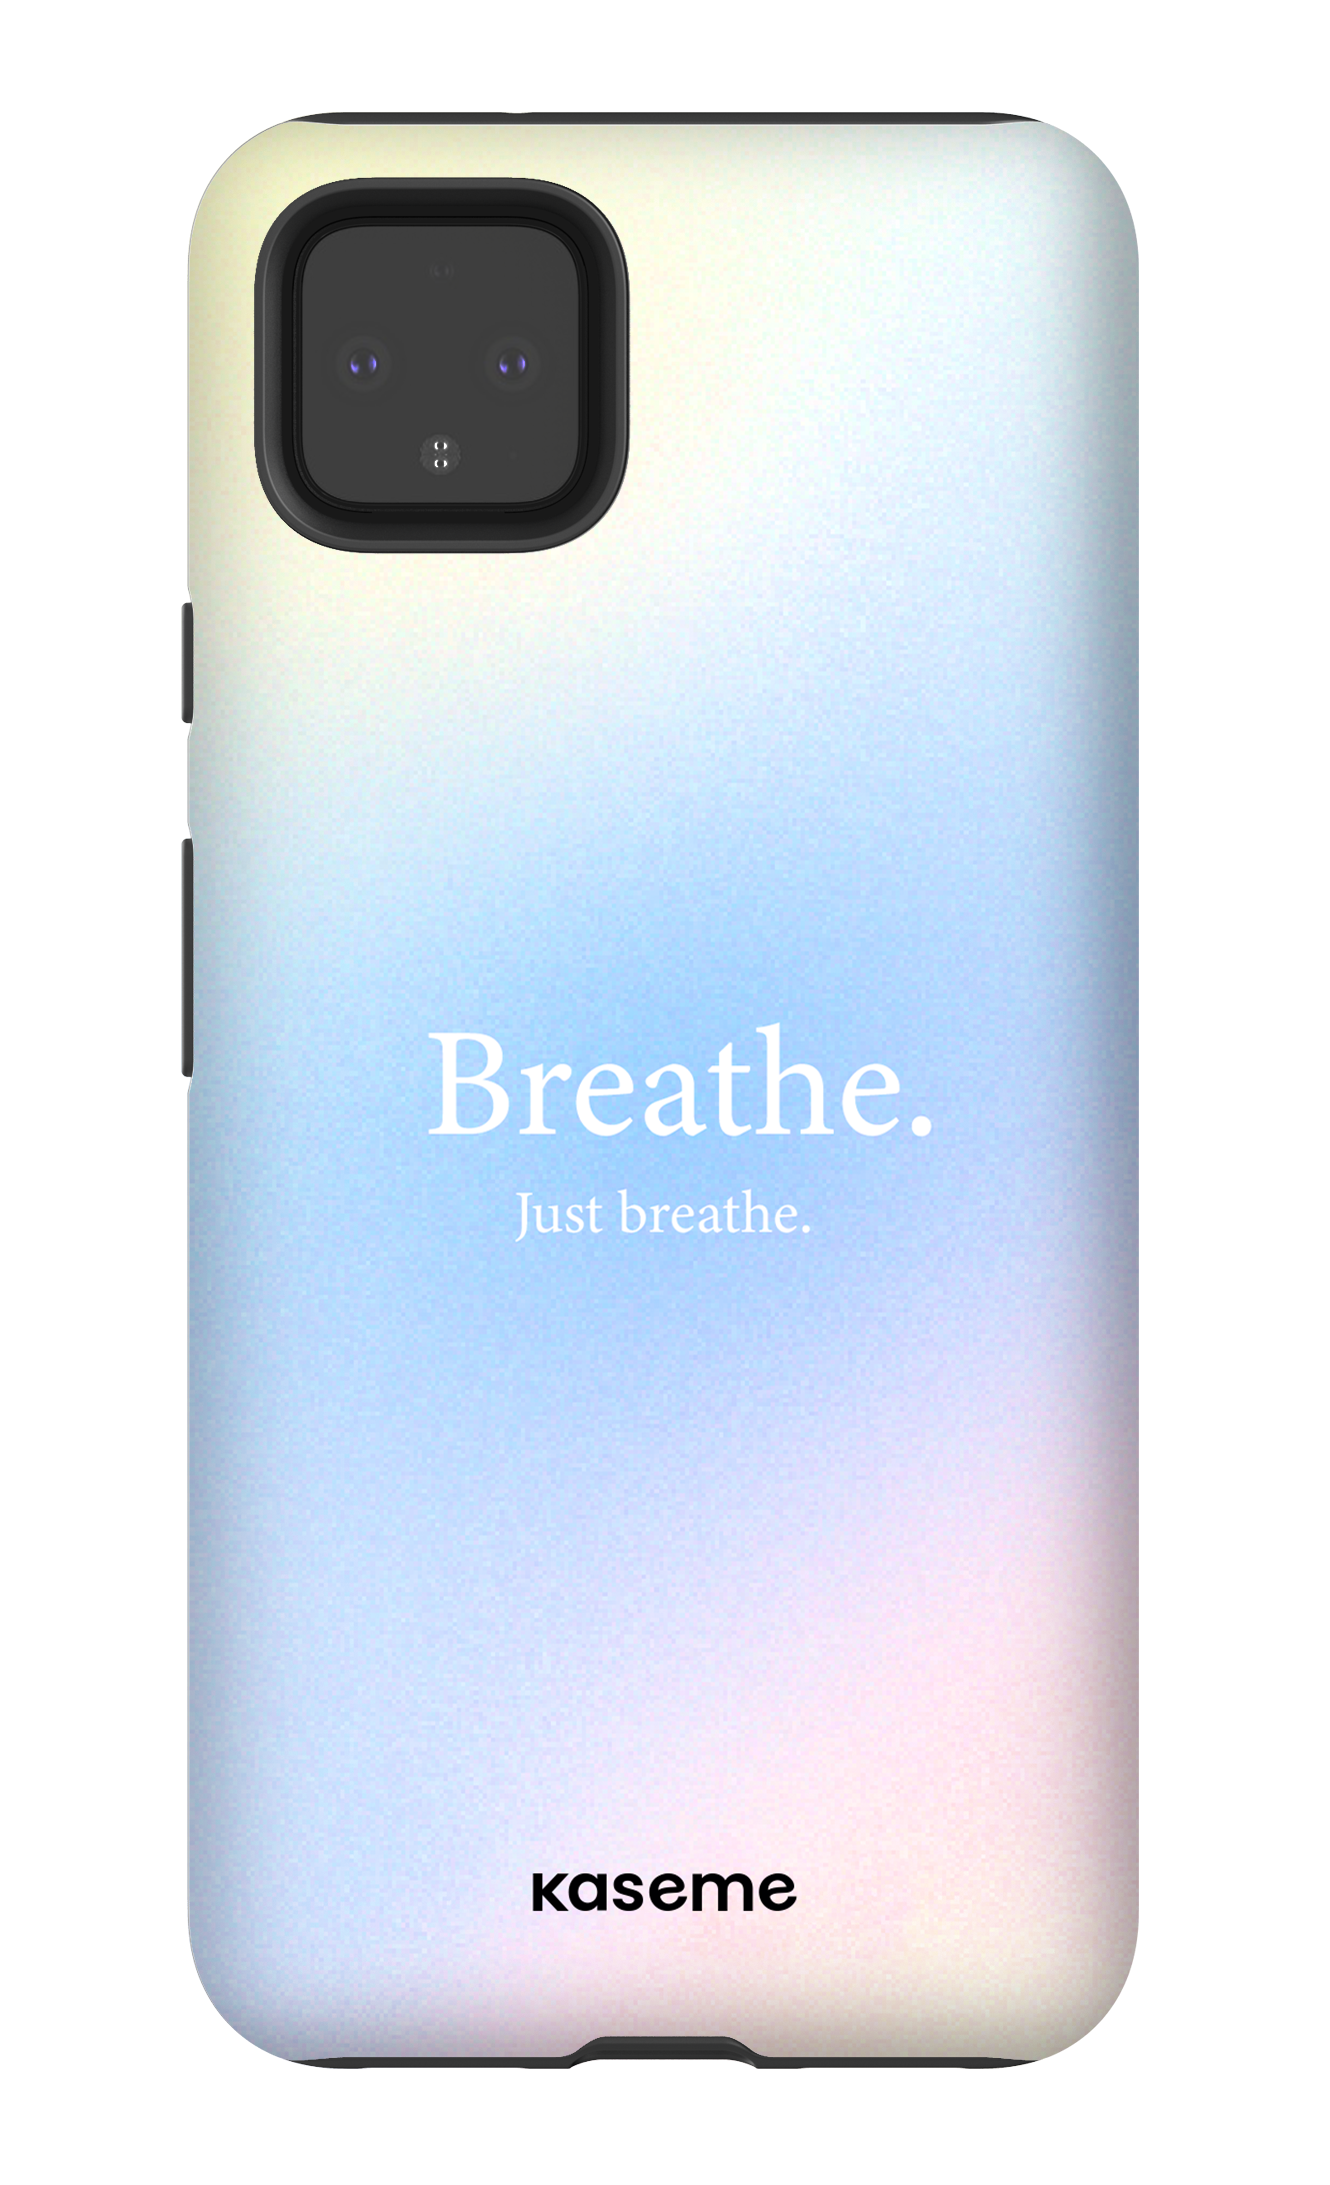 Just breathe blue - Google Pixel 4 XL